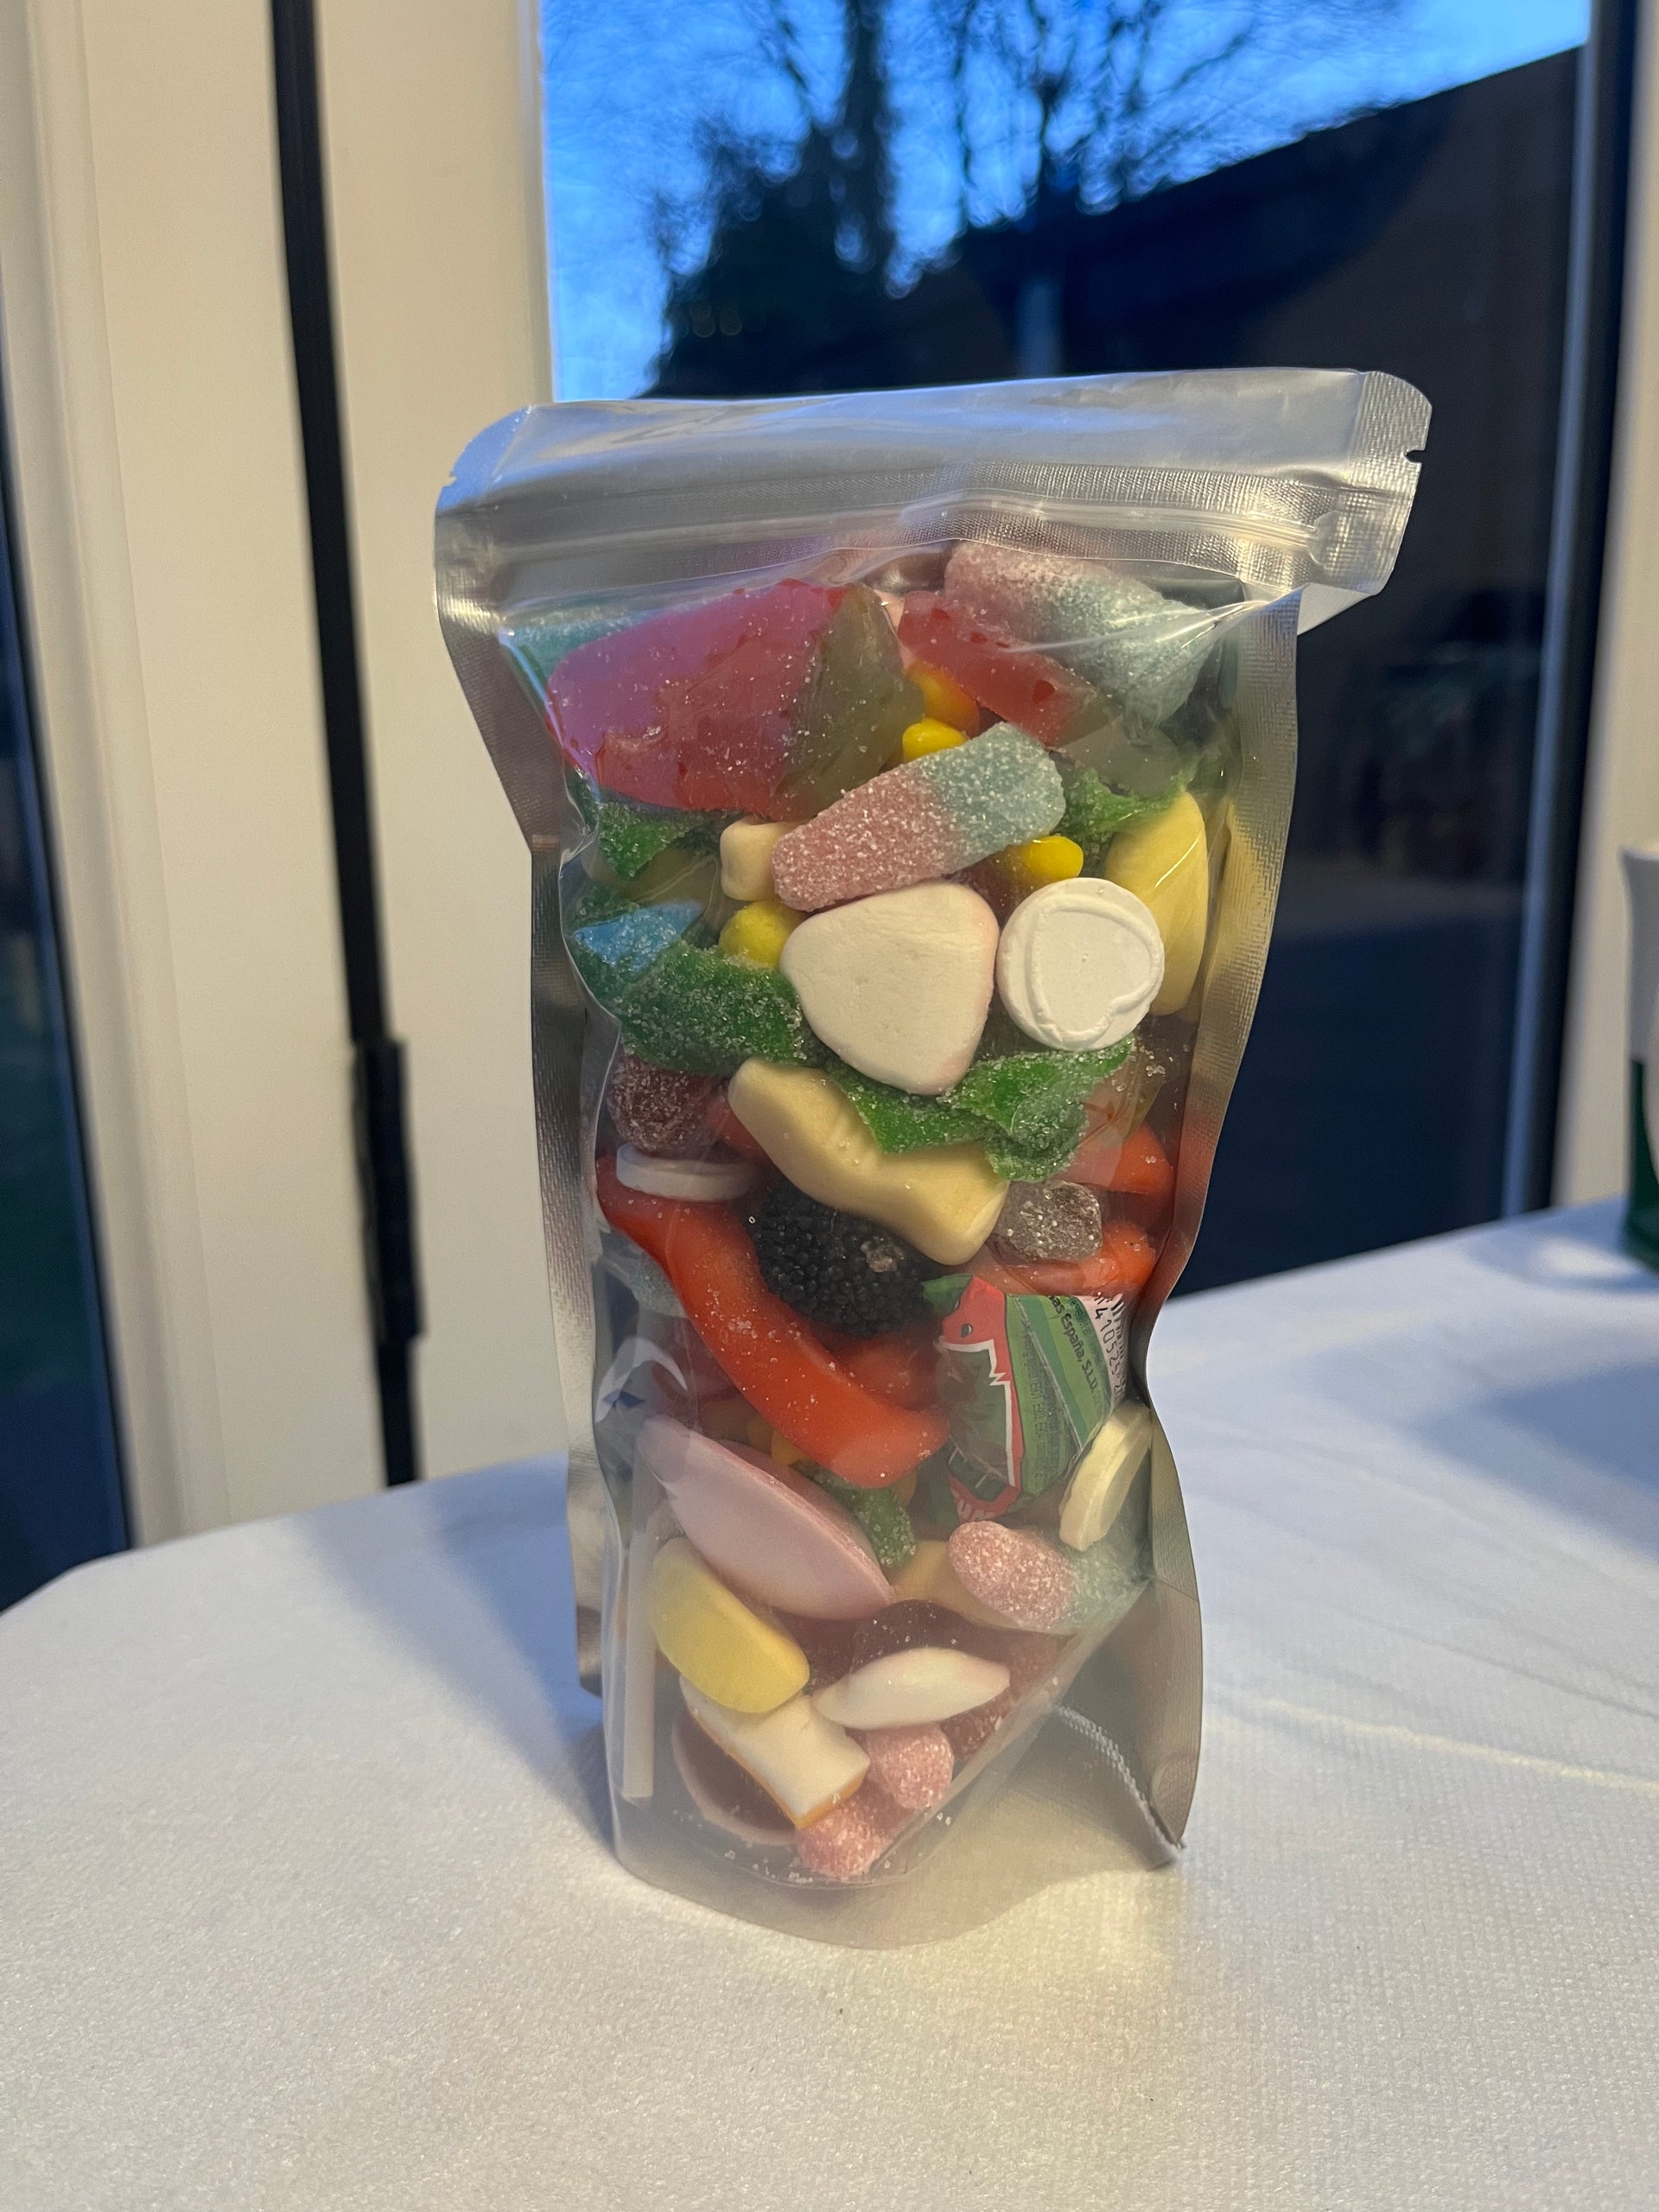 400g Pick-n-Mix Bag - This Candy